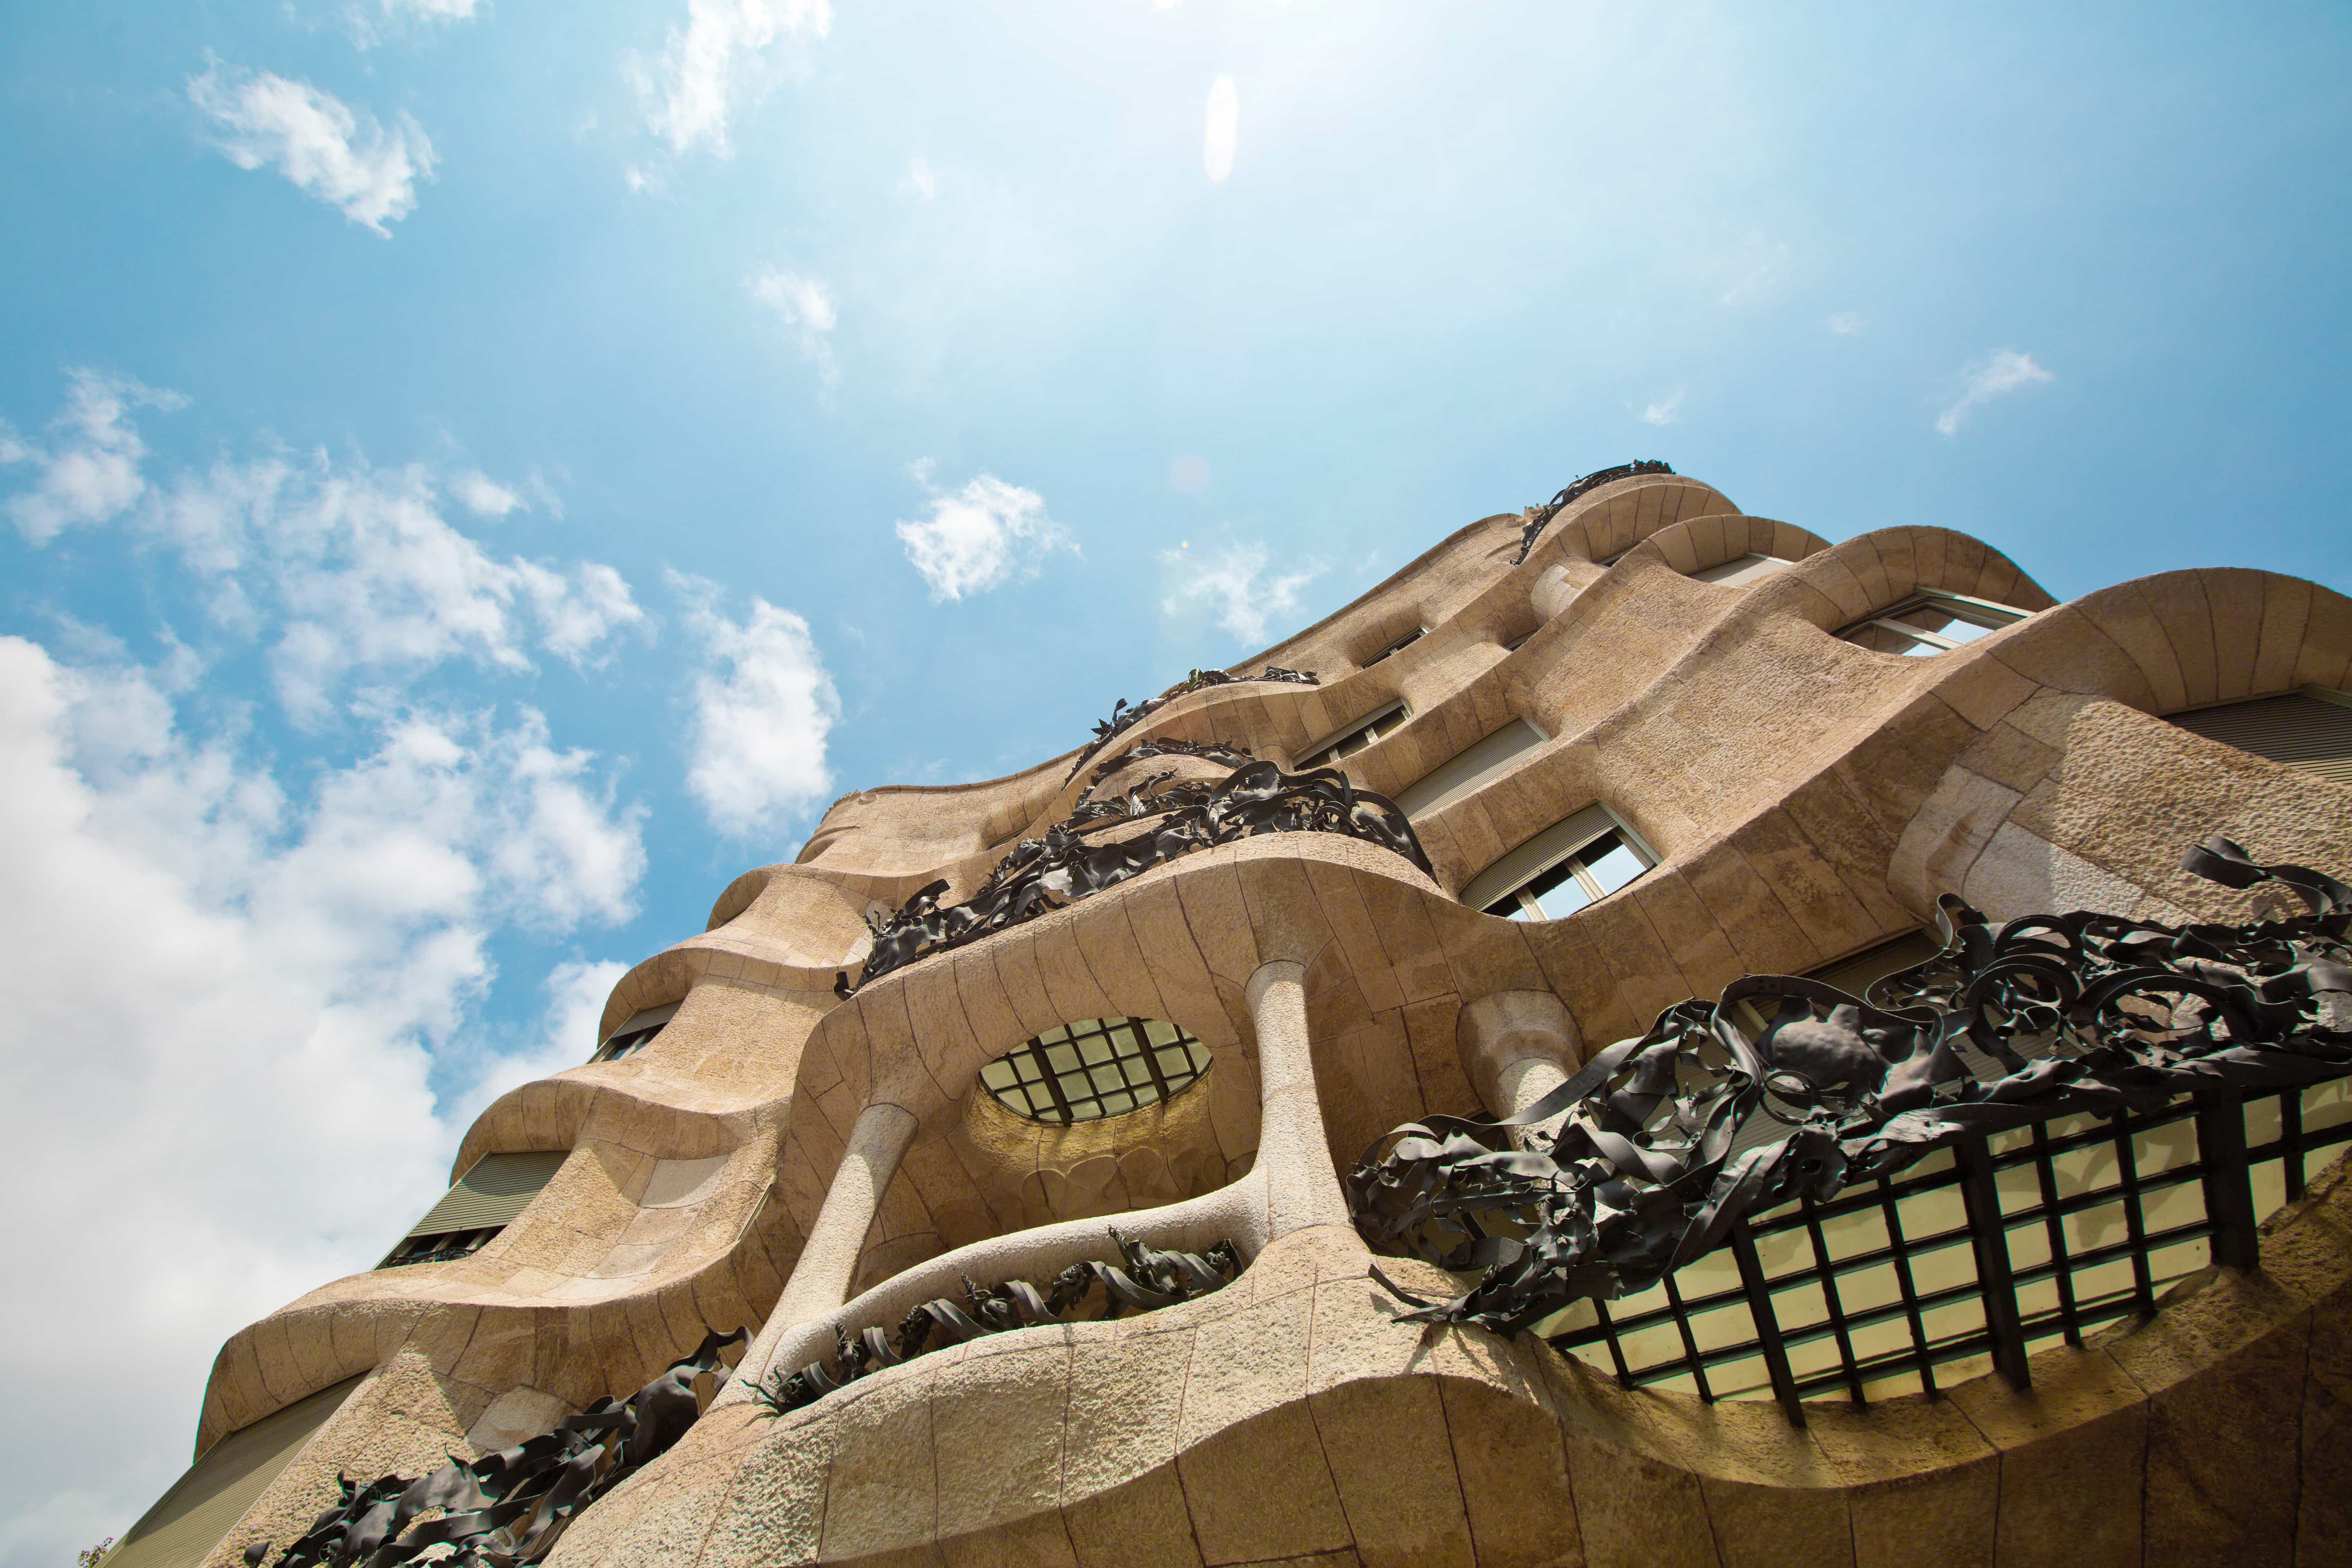 Barcelona Gaudi building